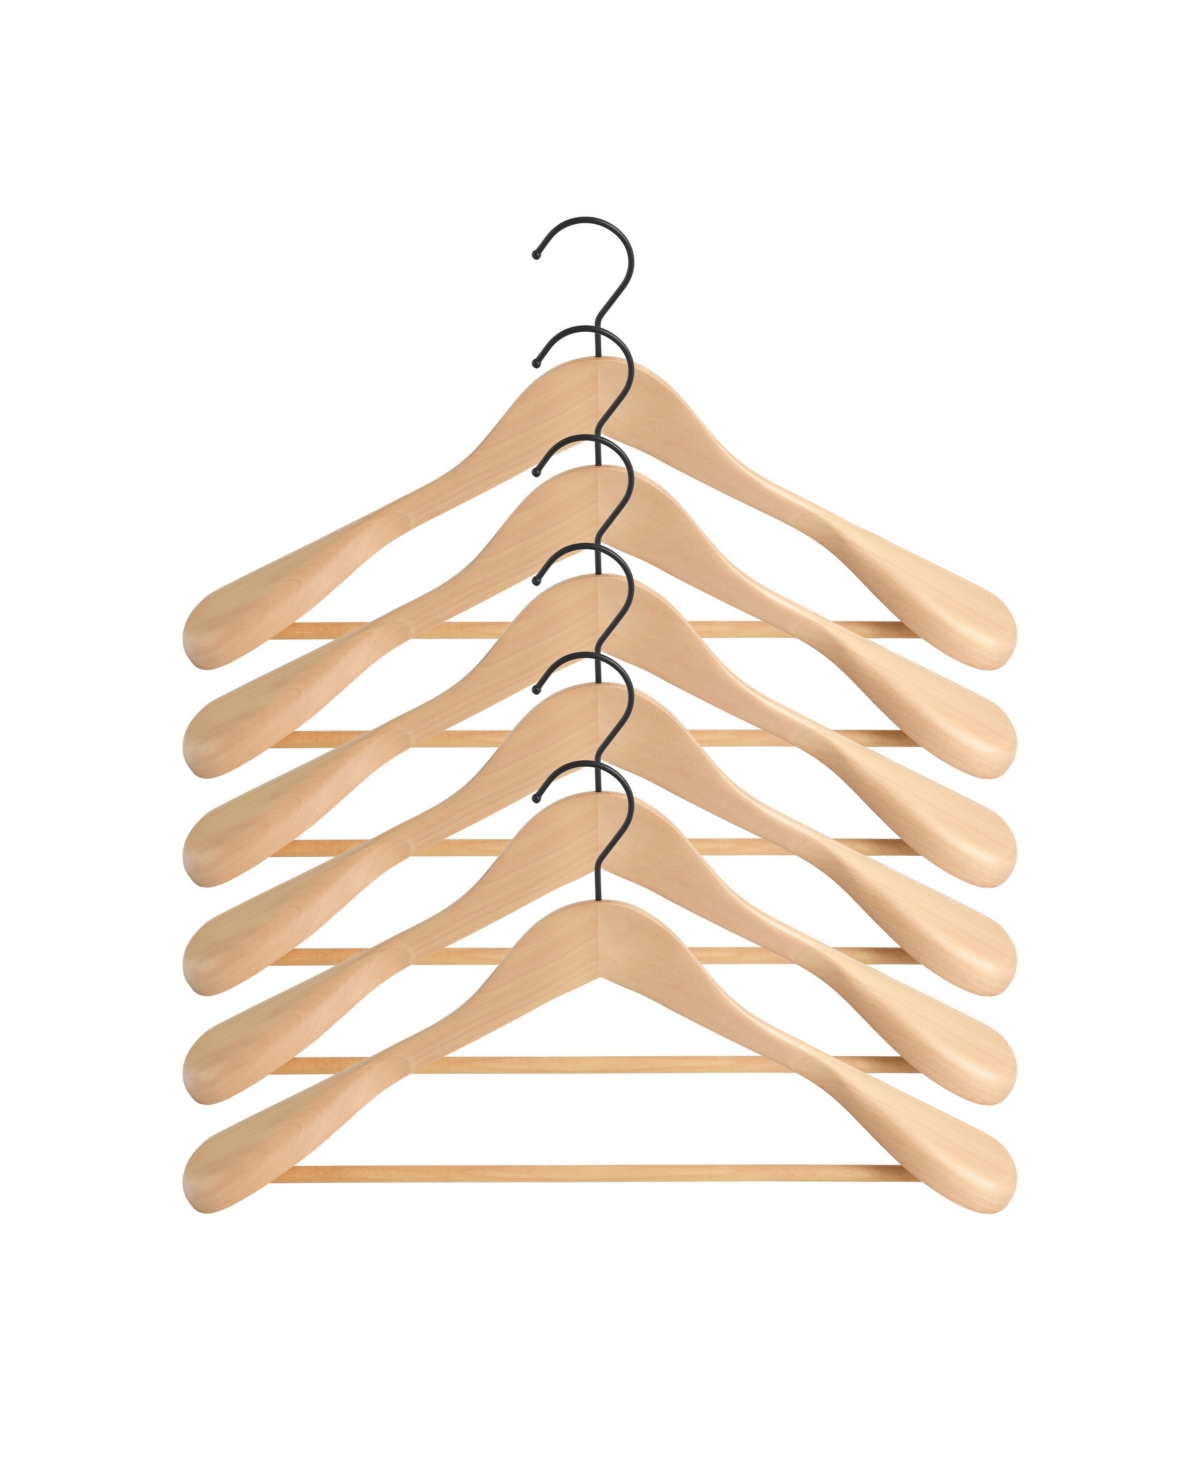 Wethinkstorage Pack Of 6 Wood Hangers With Wide Shoulder In Natural